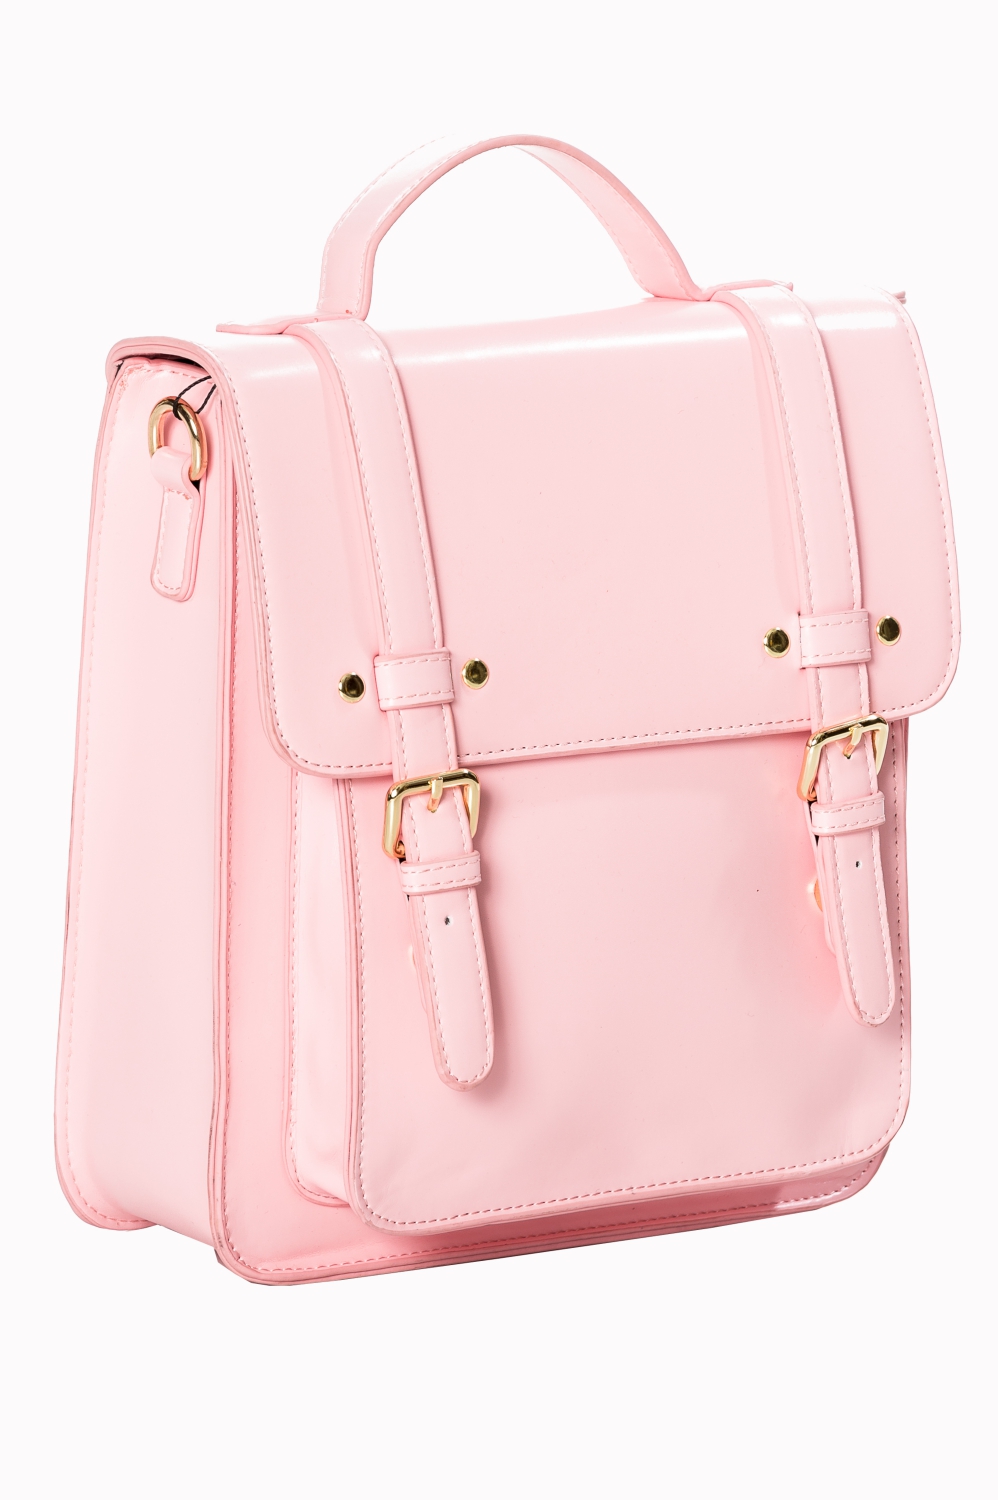 Banned Retro 60s Cohen Baby Pink Handbag